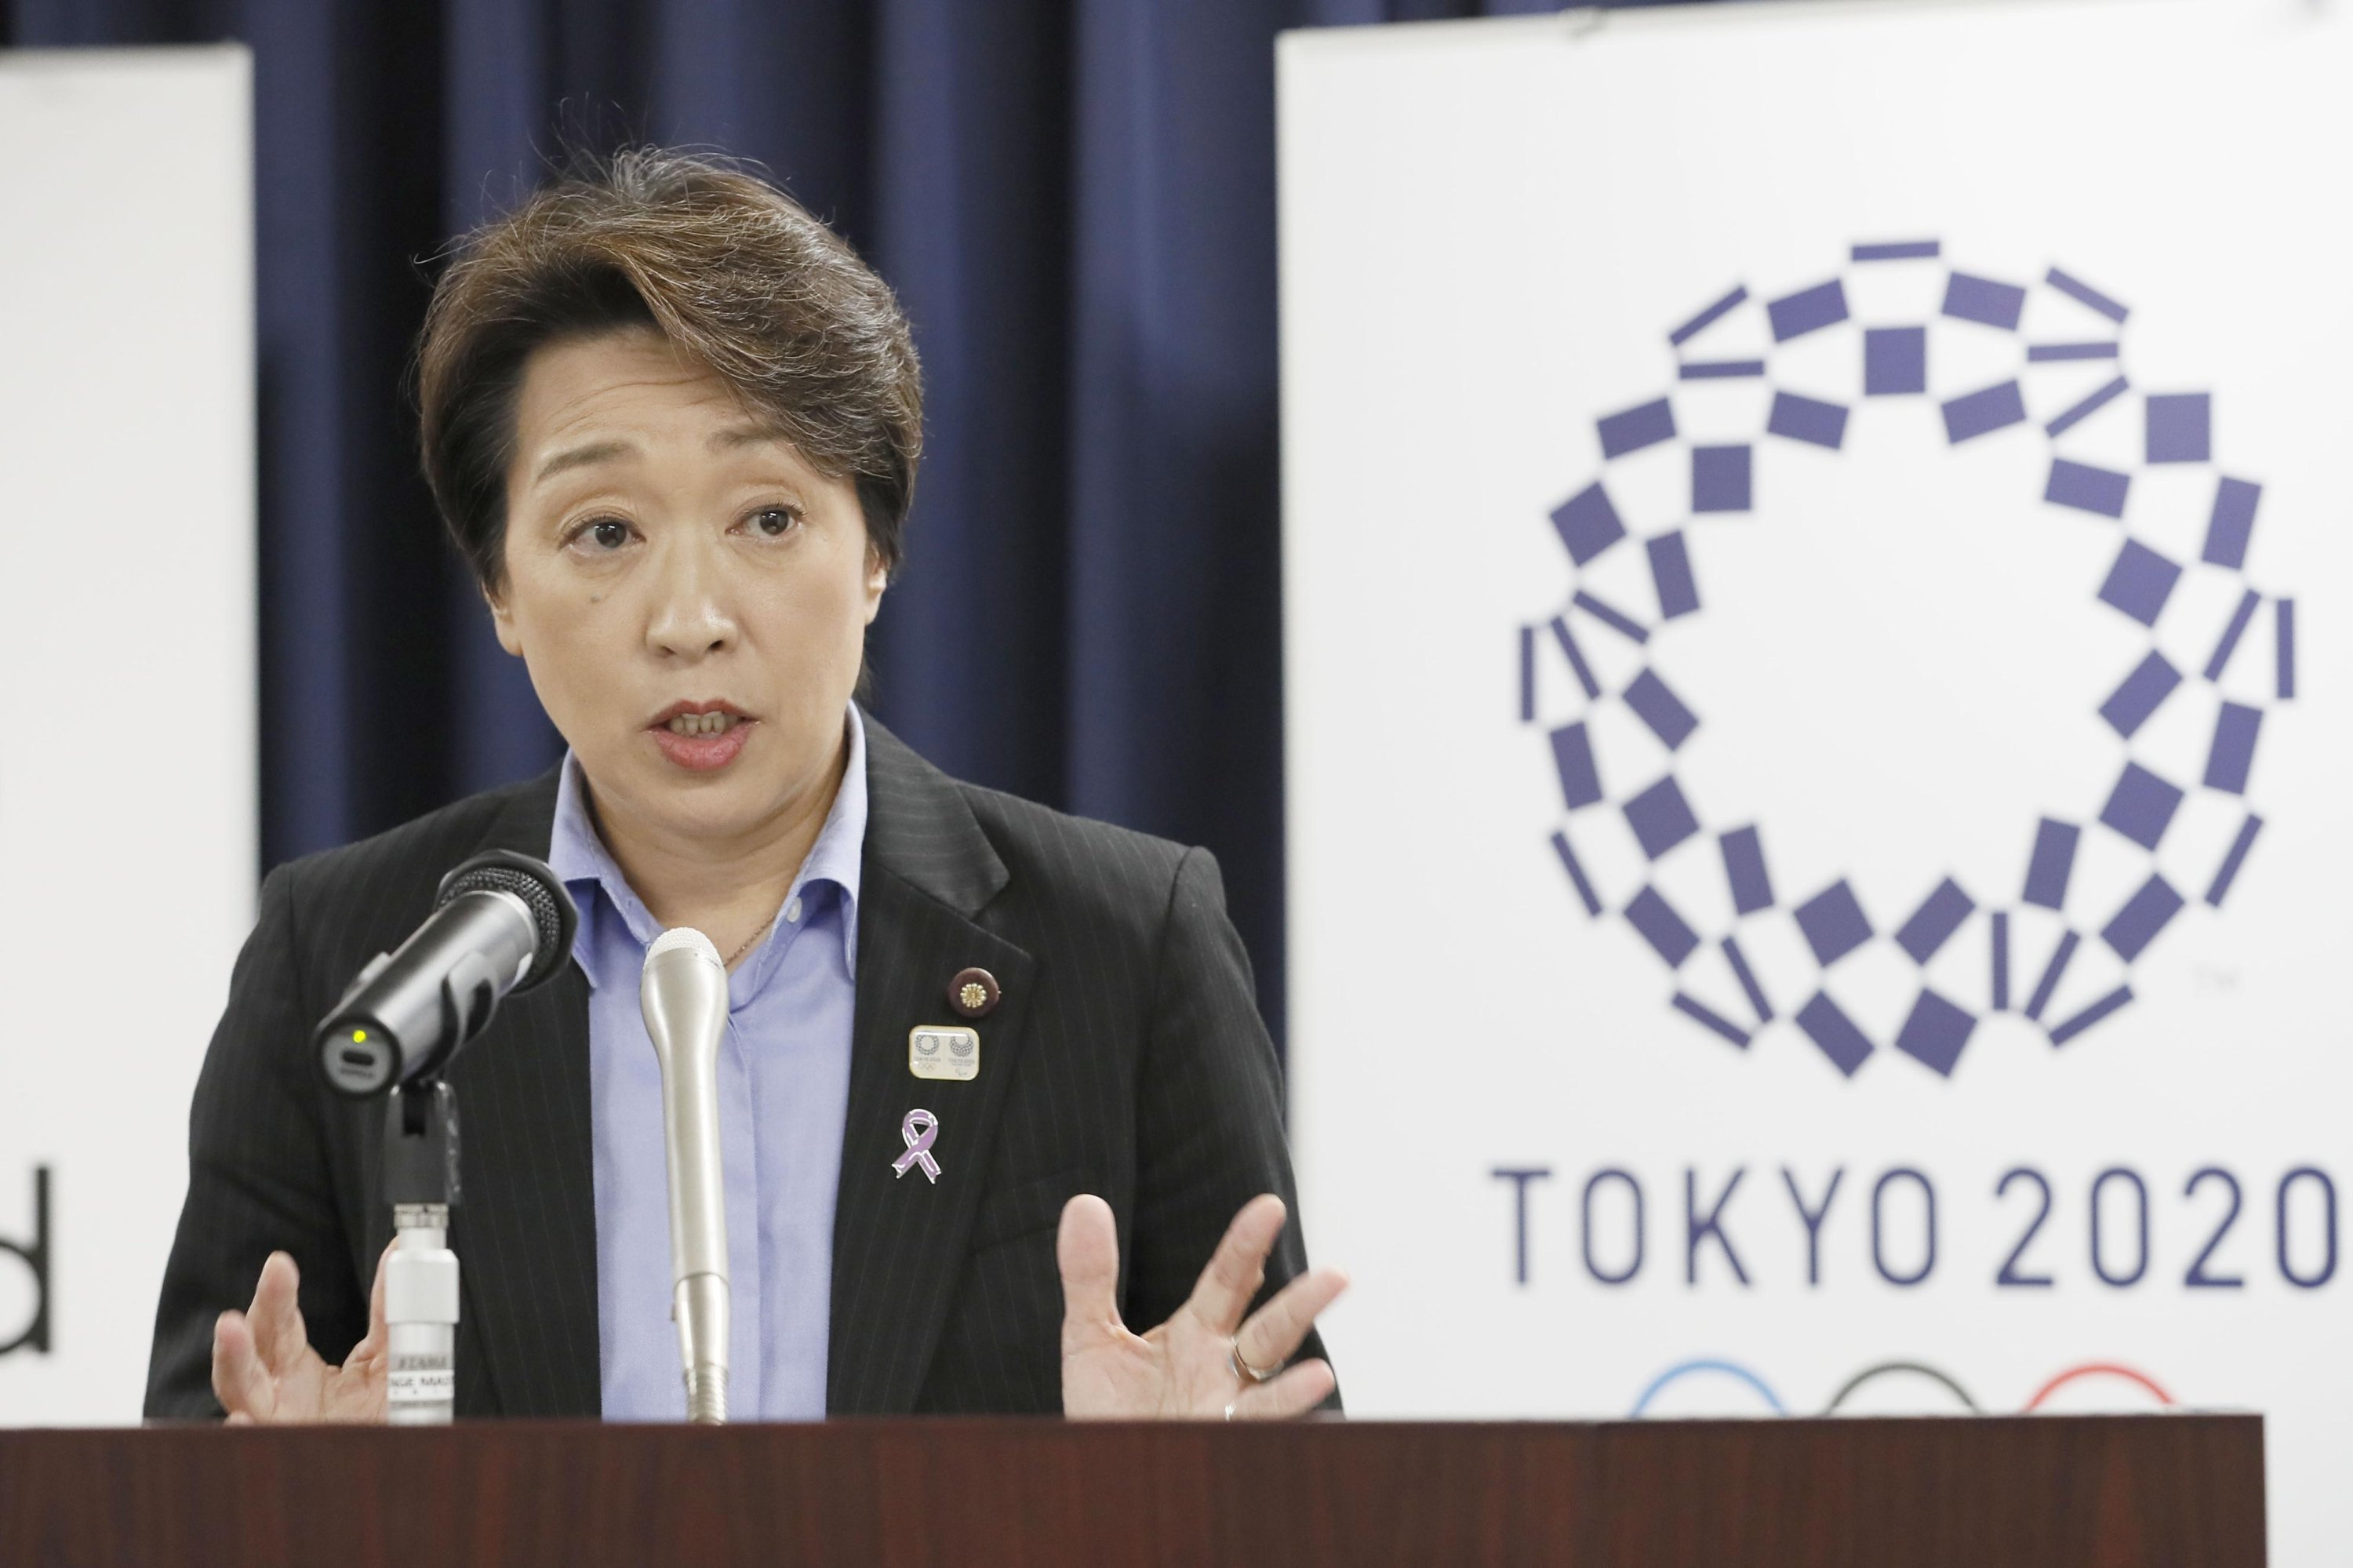 Seiko Hashimoto to lead Tokyo 2020 Olympics after sexism spat | Daily Sabah